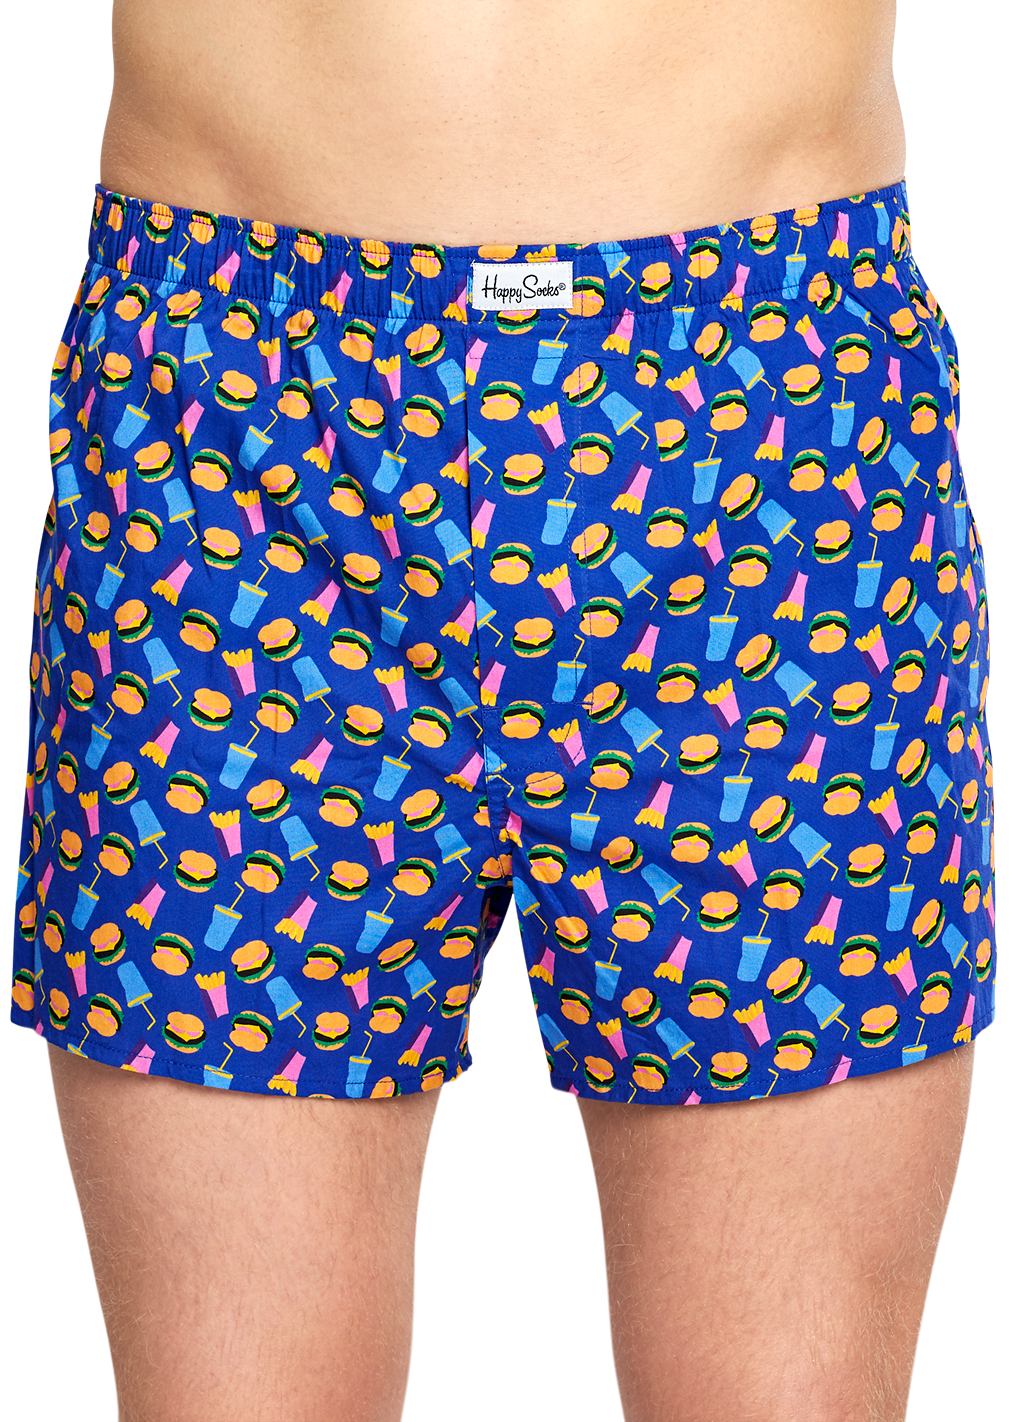 Blue Boxer: Hamburger - Underwear Happy Socks EU